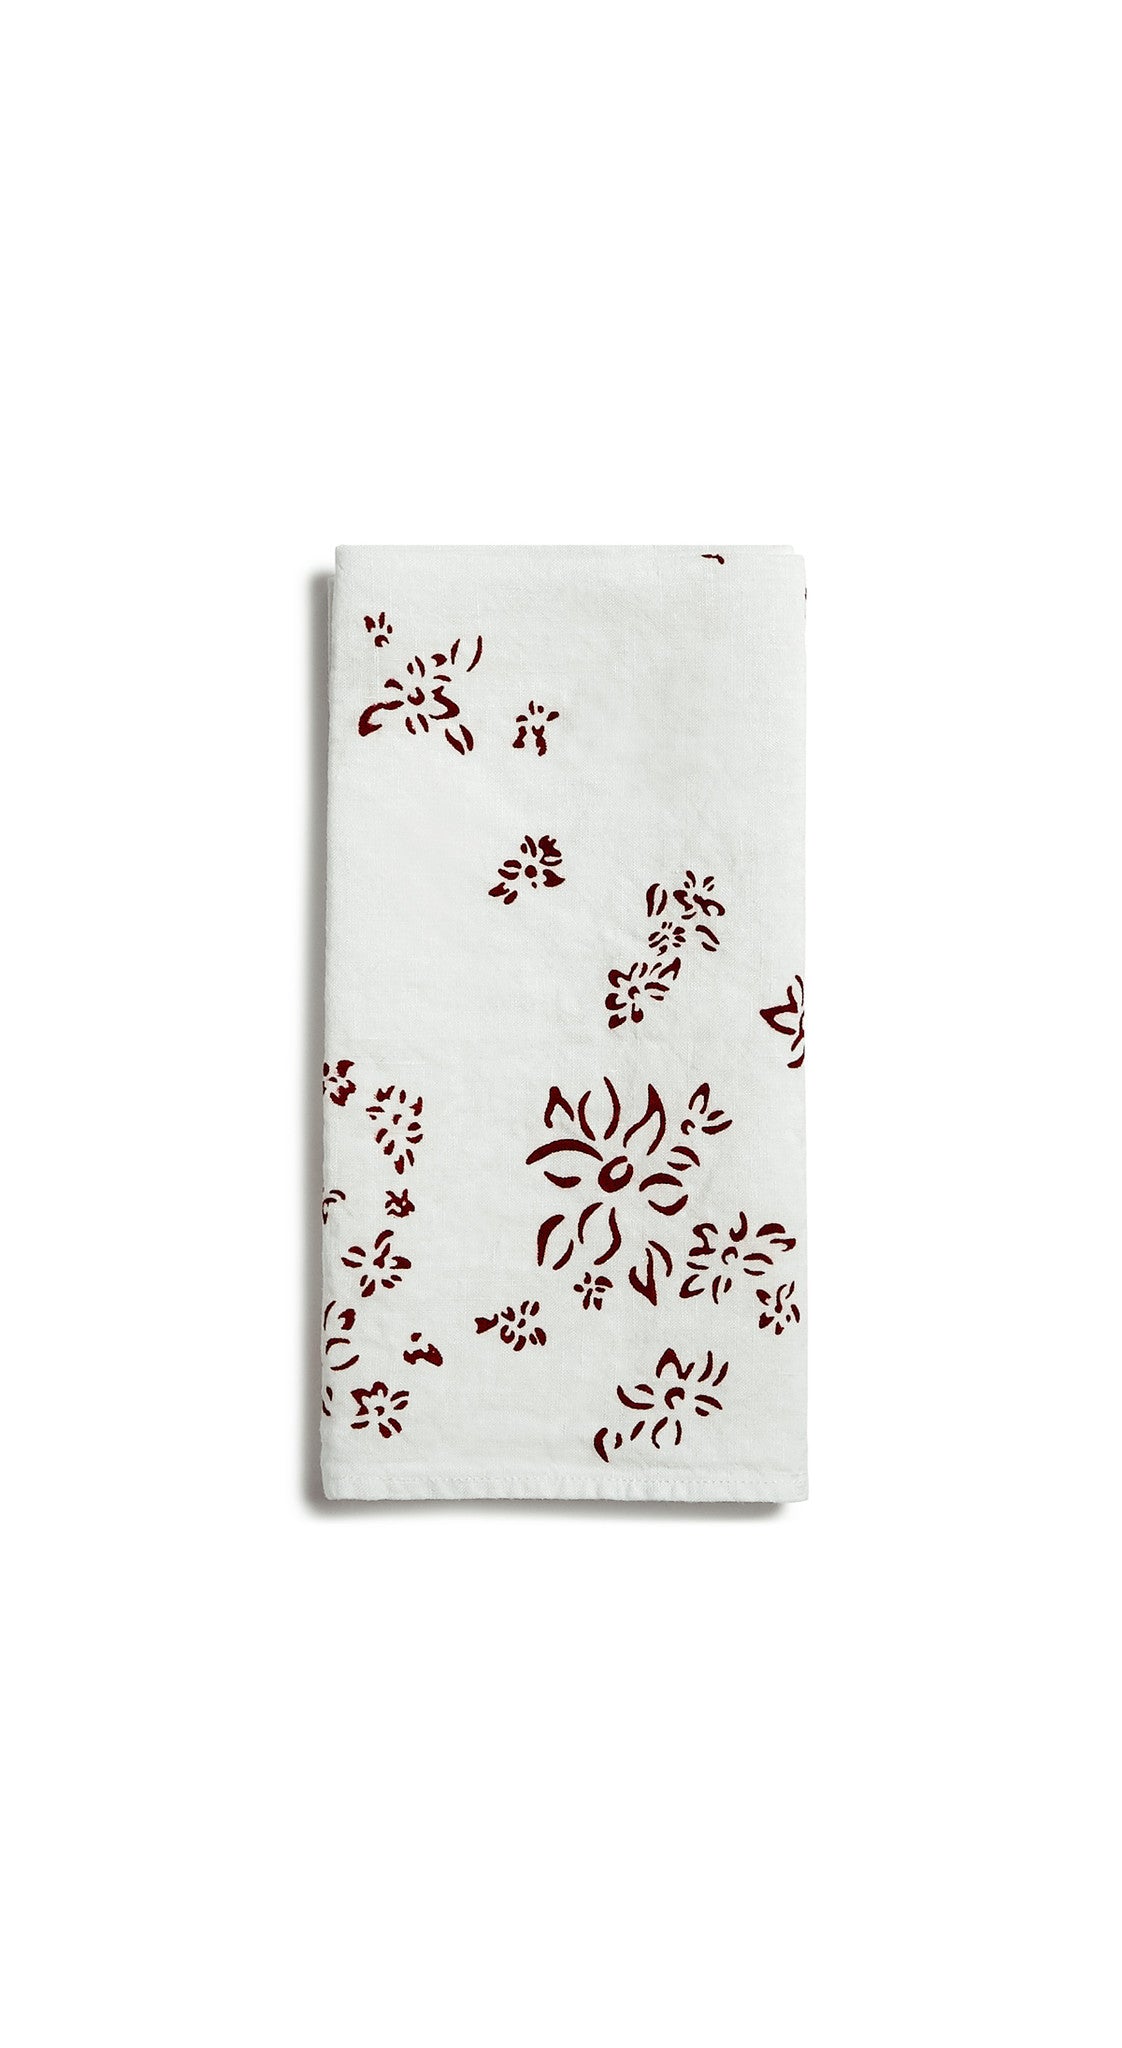 Bernadette's Hand Stamped Falling Flower Linen Napkin in Claret Red, 50x50cm